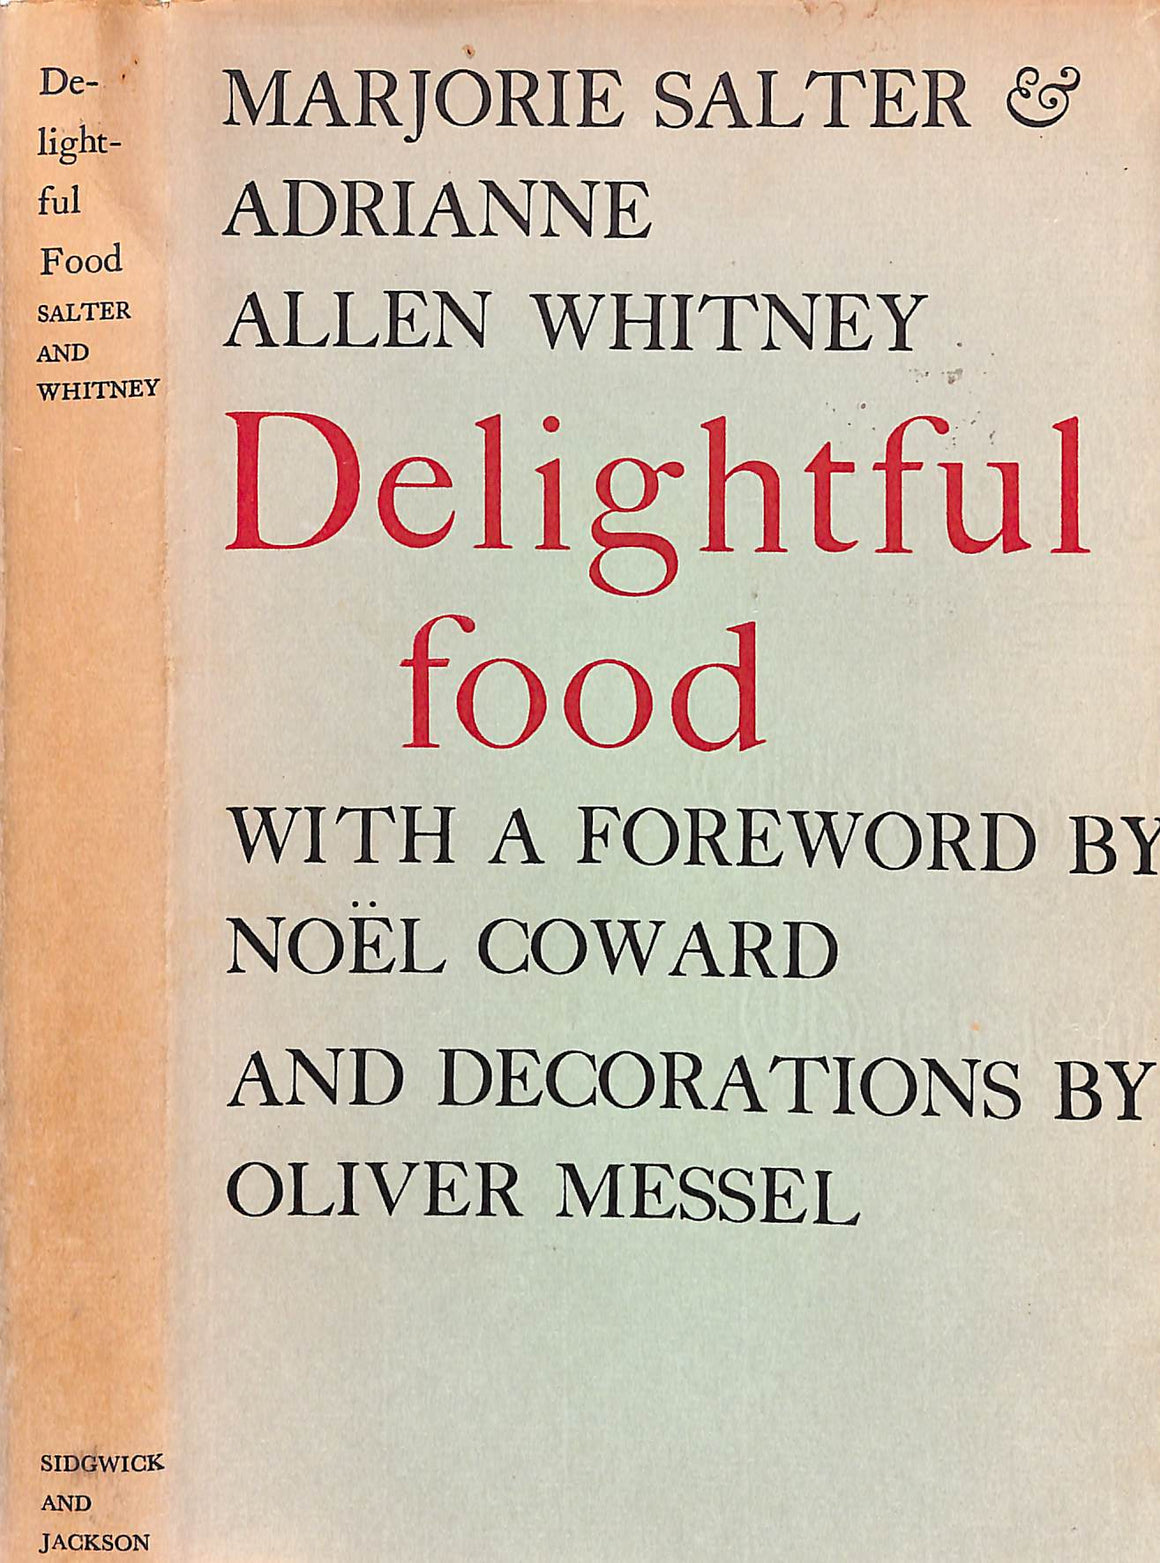 "Delightful Food" 1957 SALTER, Marjorie & Adrianne & WHITNEY, Allen